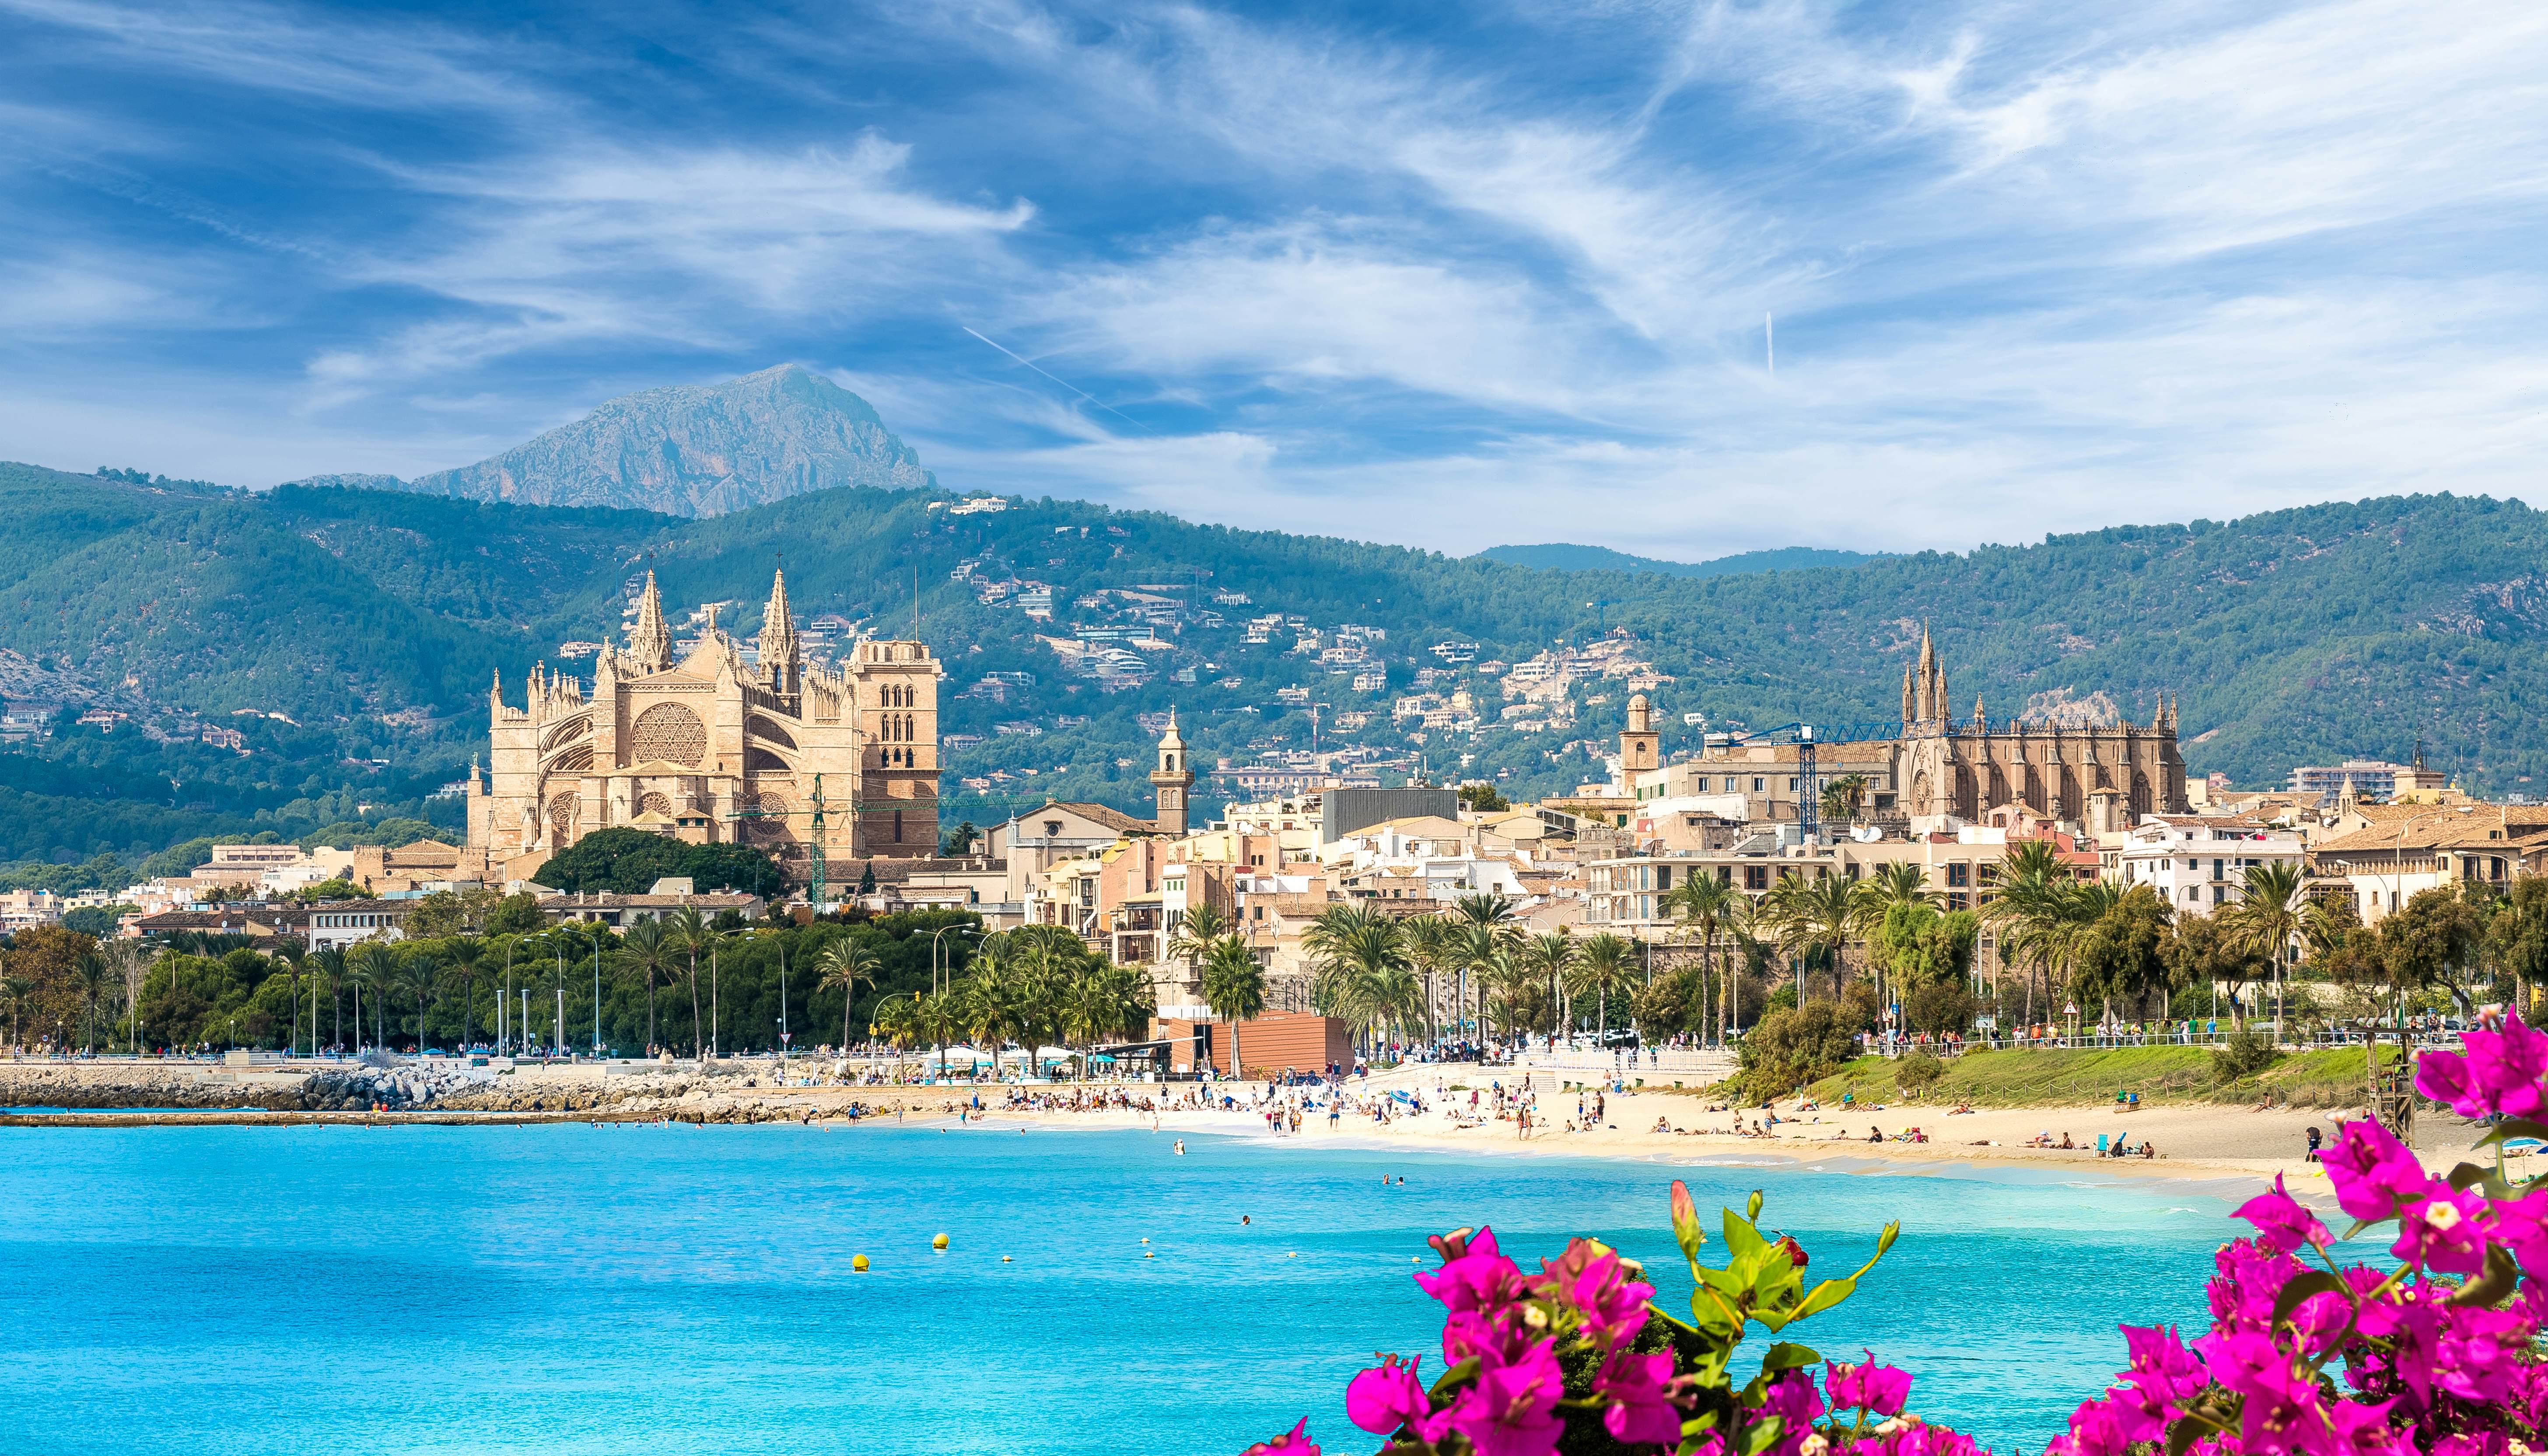 Ibiza travel - Lonely Planet